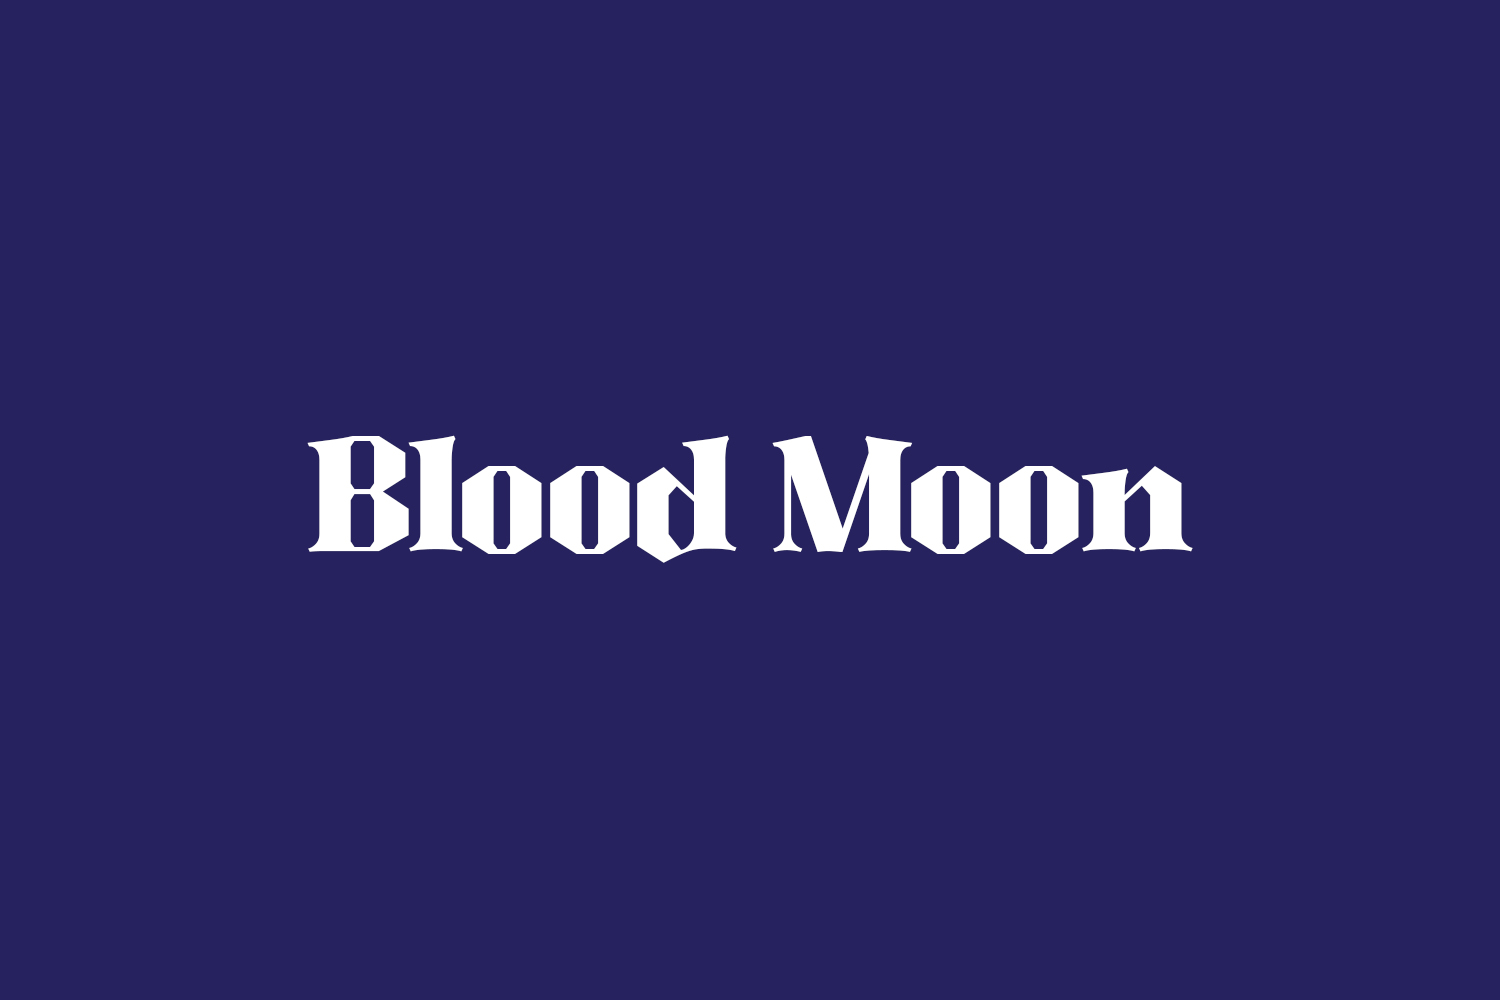 Blood Moon Free Font